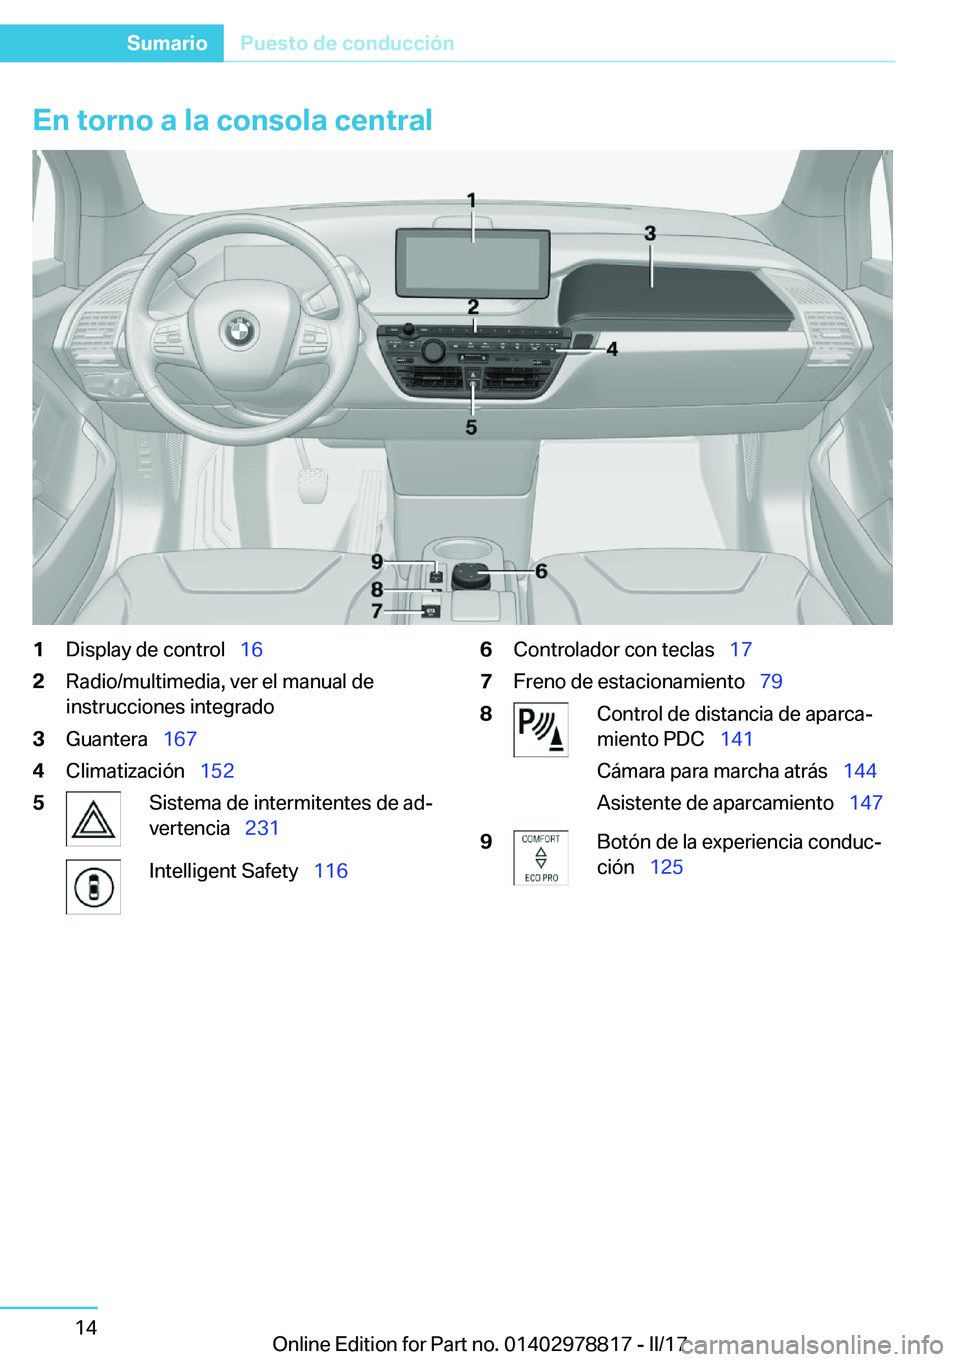 BMW I3 2017  Manuales de Empleo (in Spanish) �E�n��t�o�r�n�o��a��l�a��c�o�n�s�o�l�a��c�e�n�t�r�a�l�1�D�i�s�p�l�a�y� �d�e� �c�o�n�t�r�o�l\_�1�6�2�R�a�d�i�o�/�m�u�l�t�i�m�e�d�i�a�,� �v�e�r� �e�l� �m�a�n�u�a�l� �d�e
�i�n�s�t�r�u�c�c�i�o�n�e�